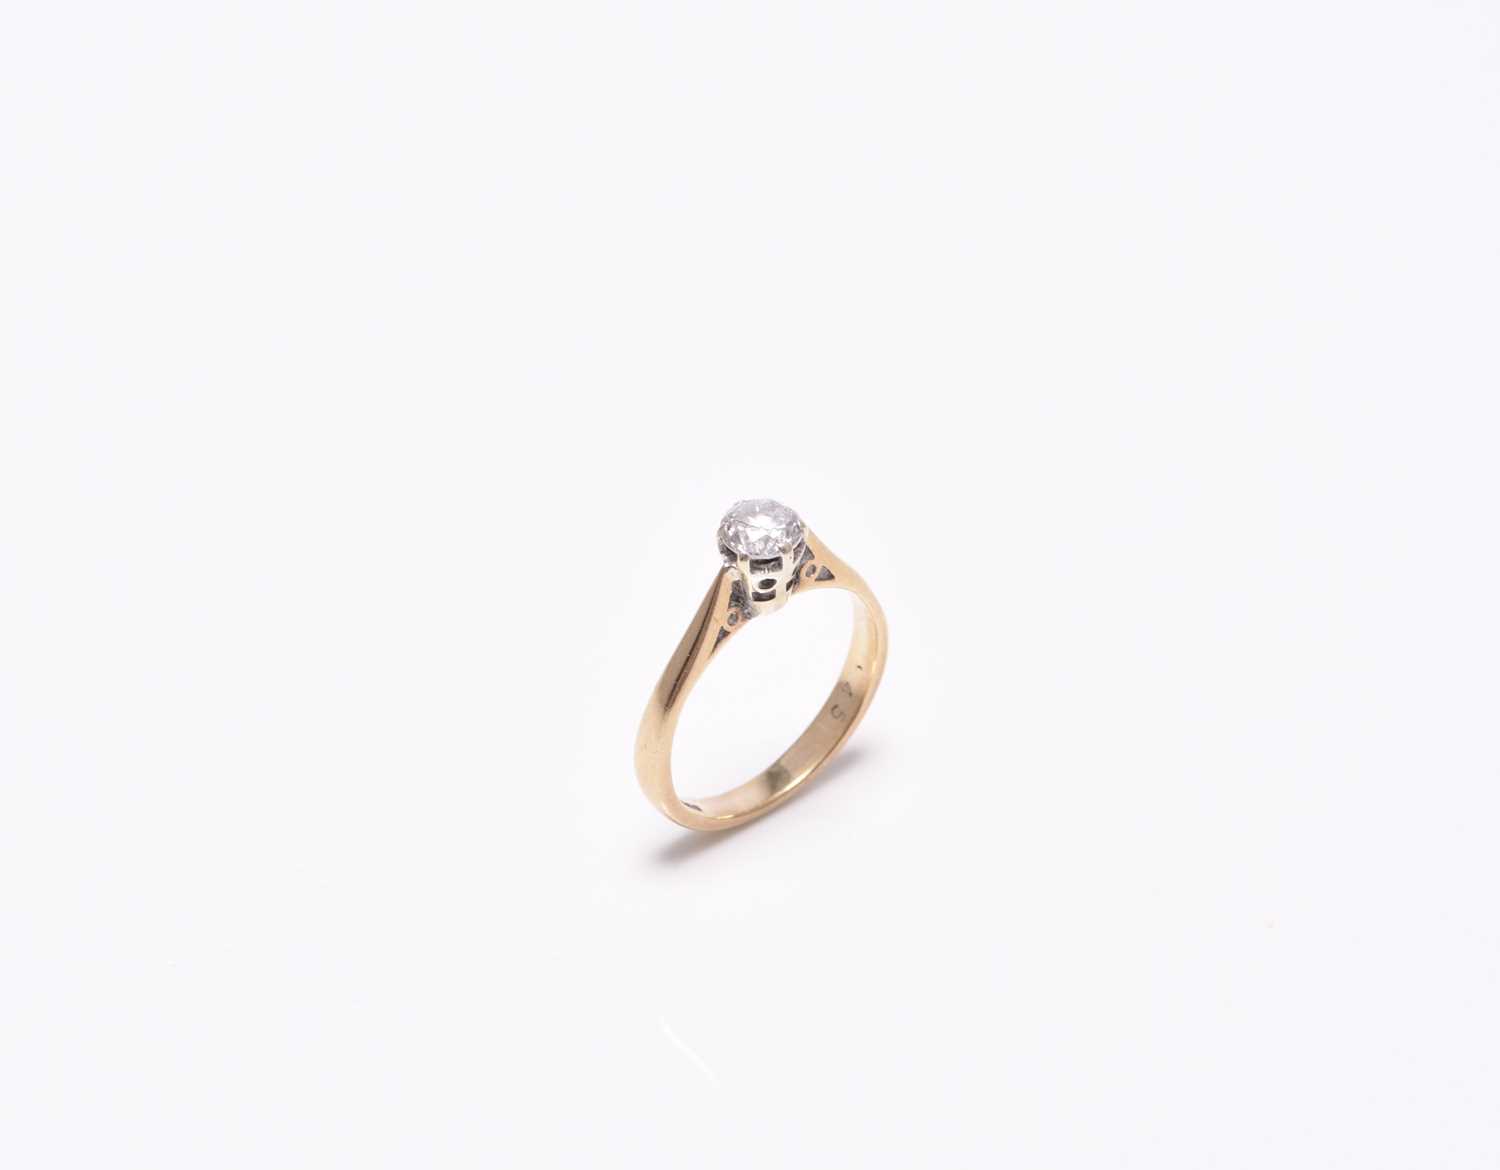 A 9ct gold single stone diamond ring